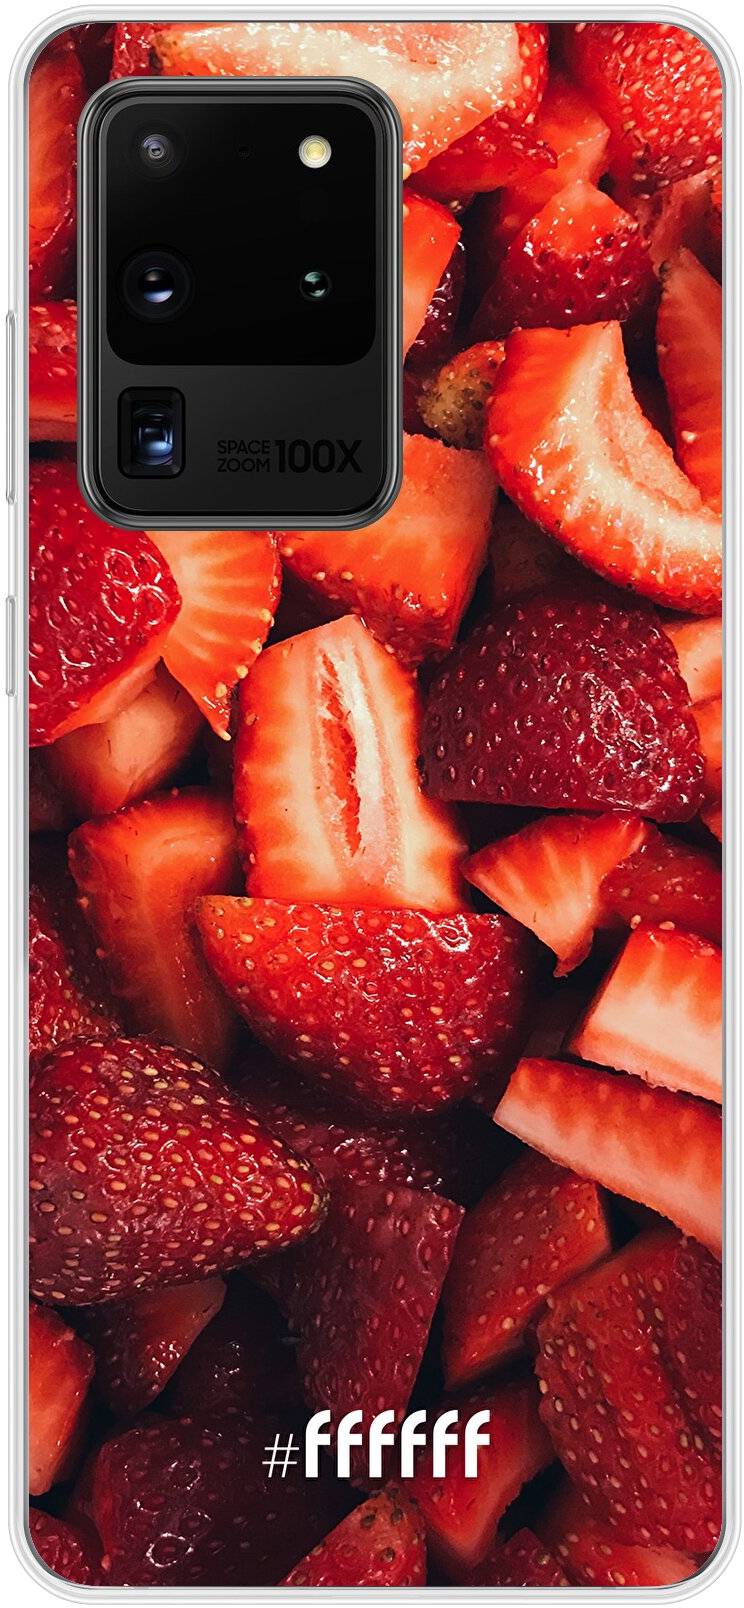 Strawberry Fields Galaxy S20 Ultra